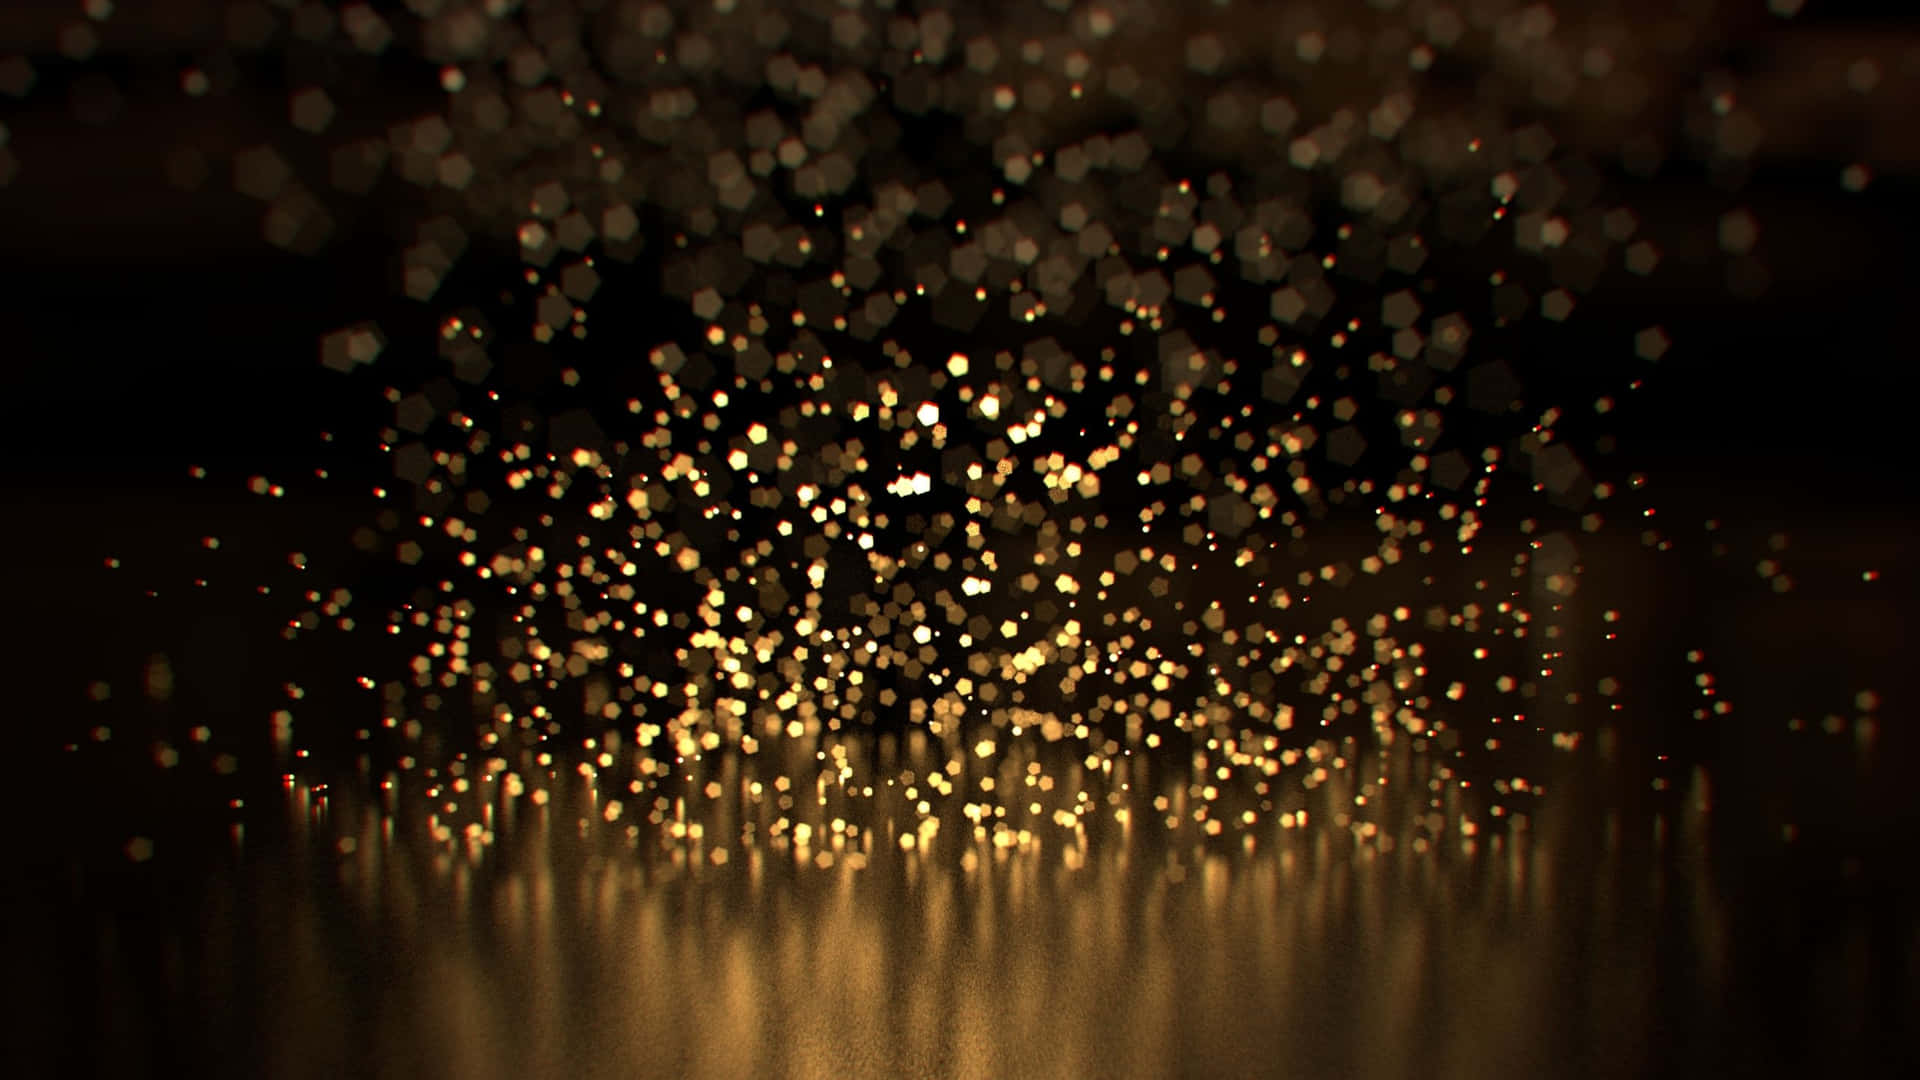 Blurred Black And Gold Glitter Wallpaper